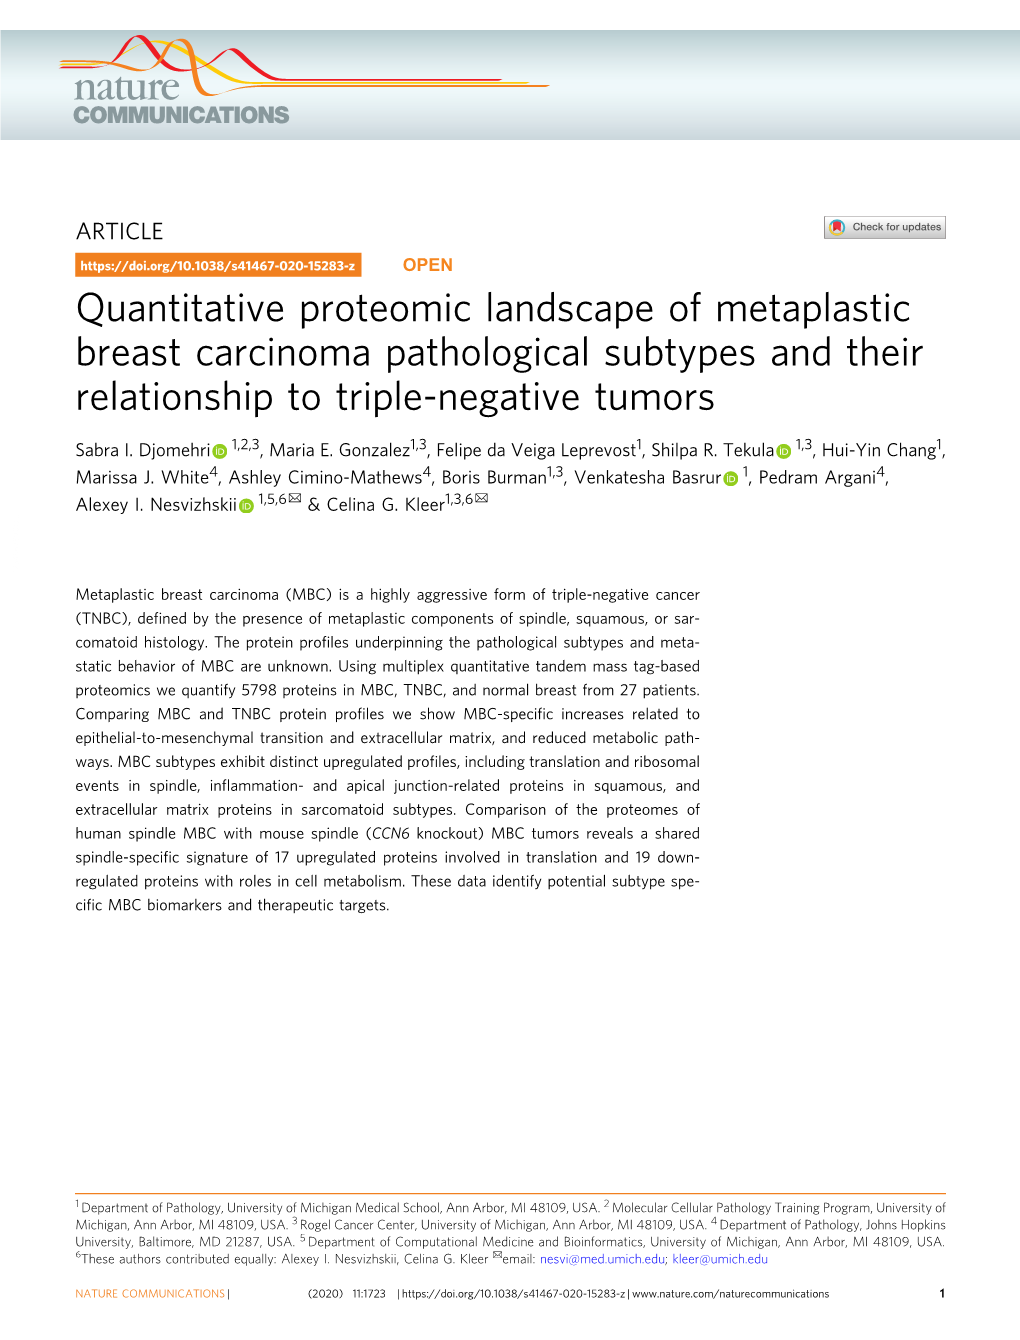 Quantitative Proteomic Landscape of Metaplastic Breast Carcinoma Pathological Subtypes and Their Relationship to Triple-Negative Tumors